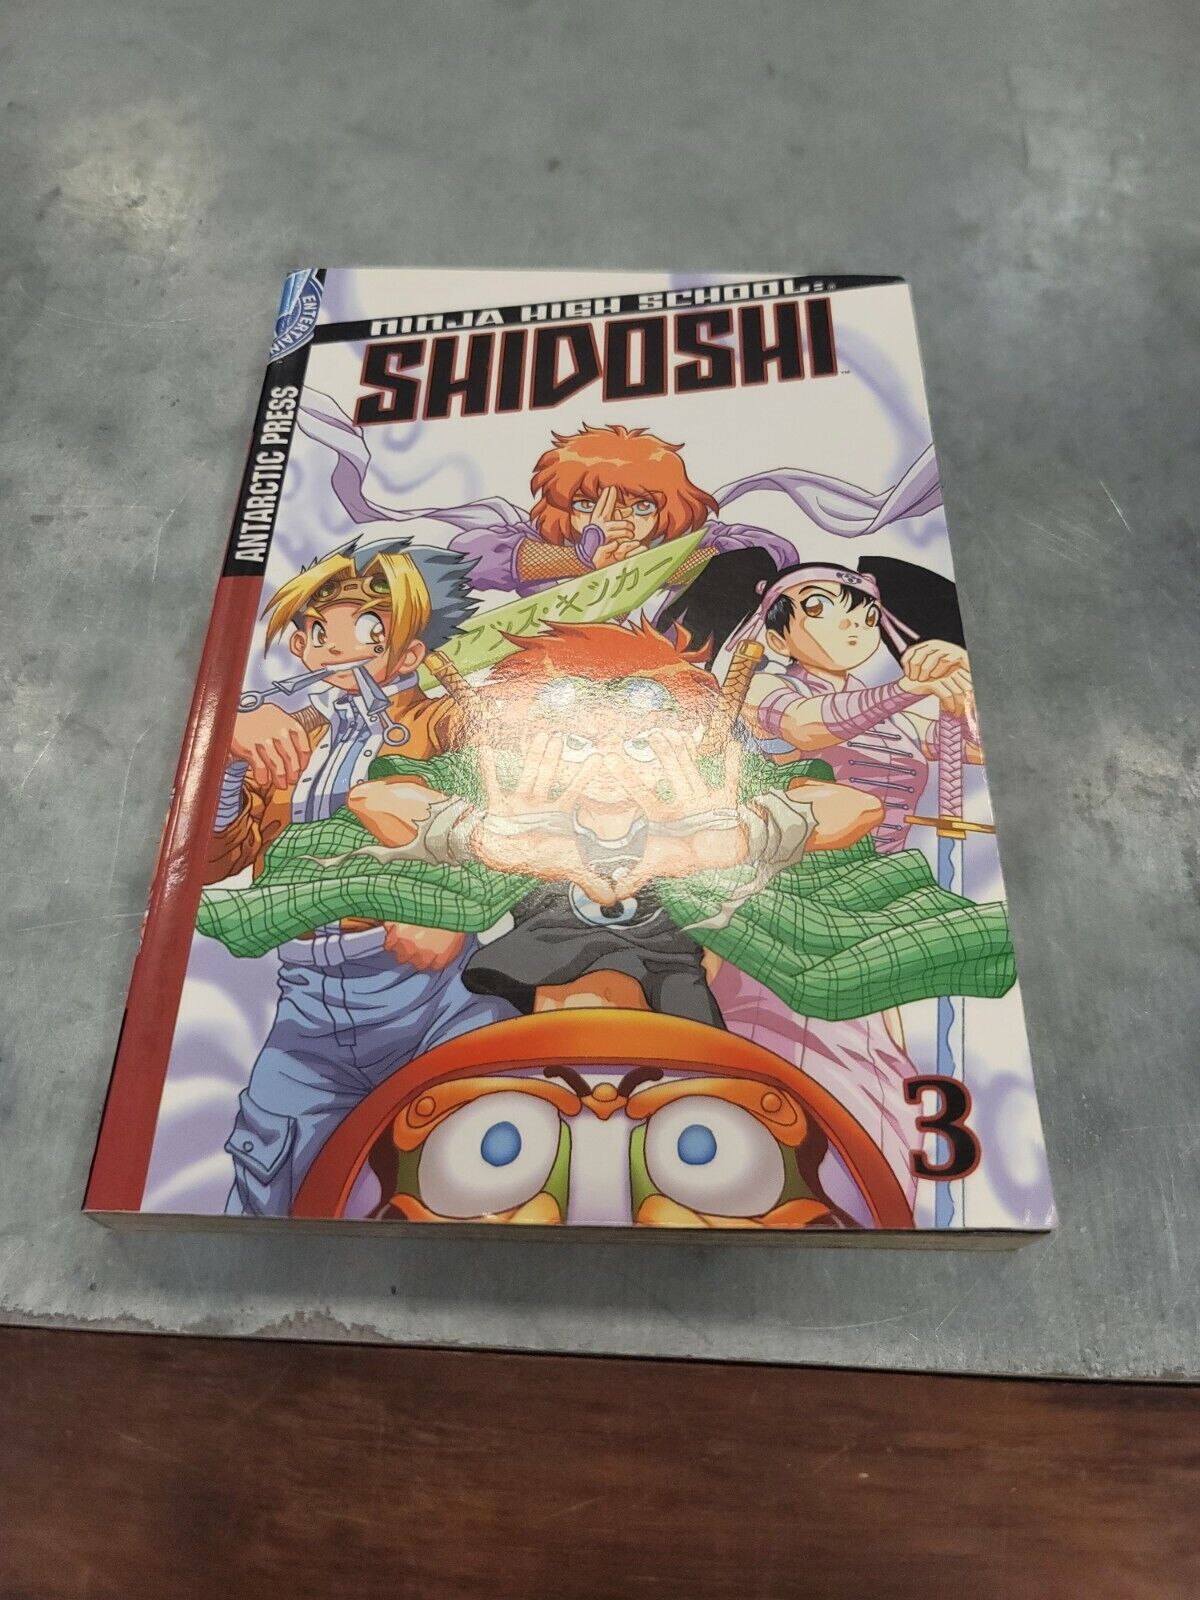 Shidoshi Volume 3 (Ninja High School) (Paperback) Manga Book in English